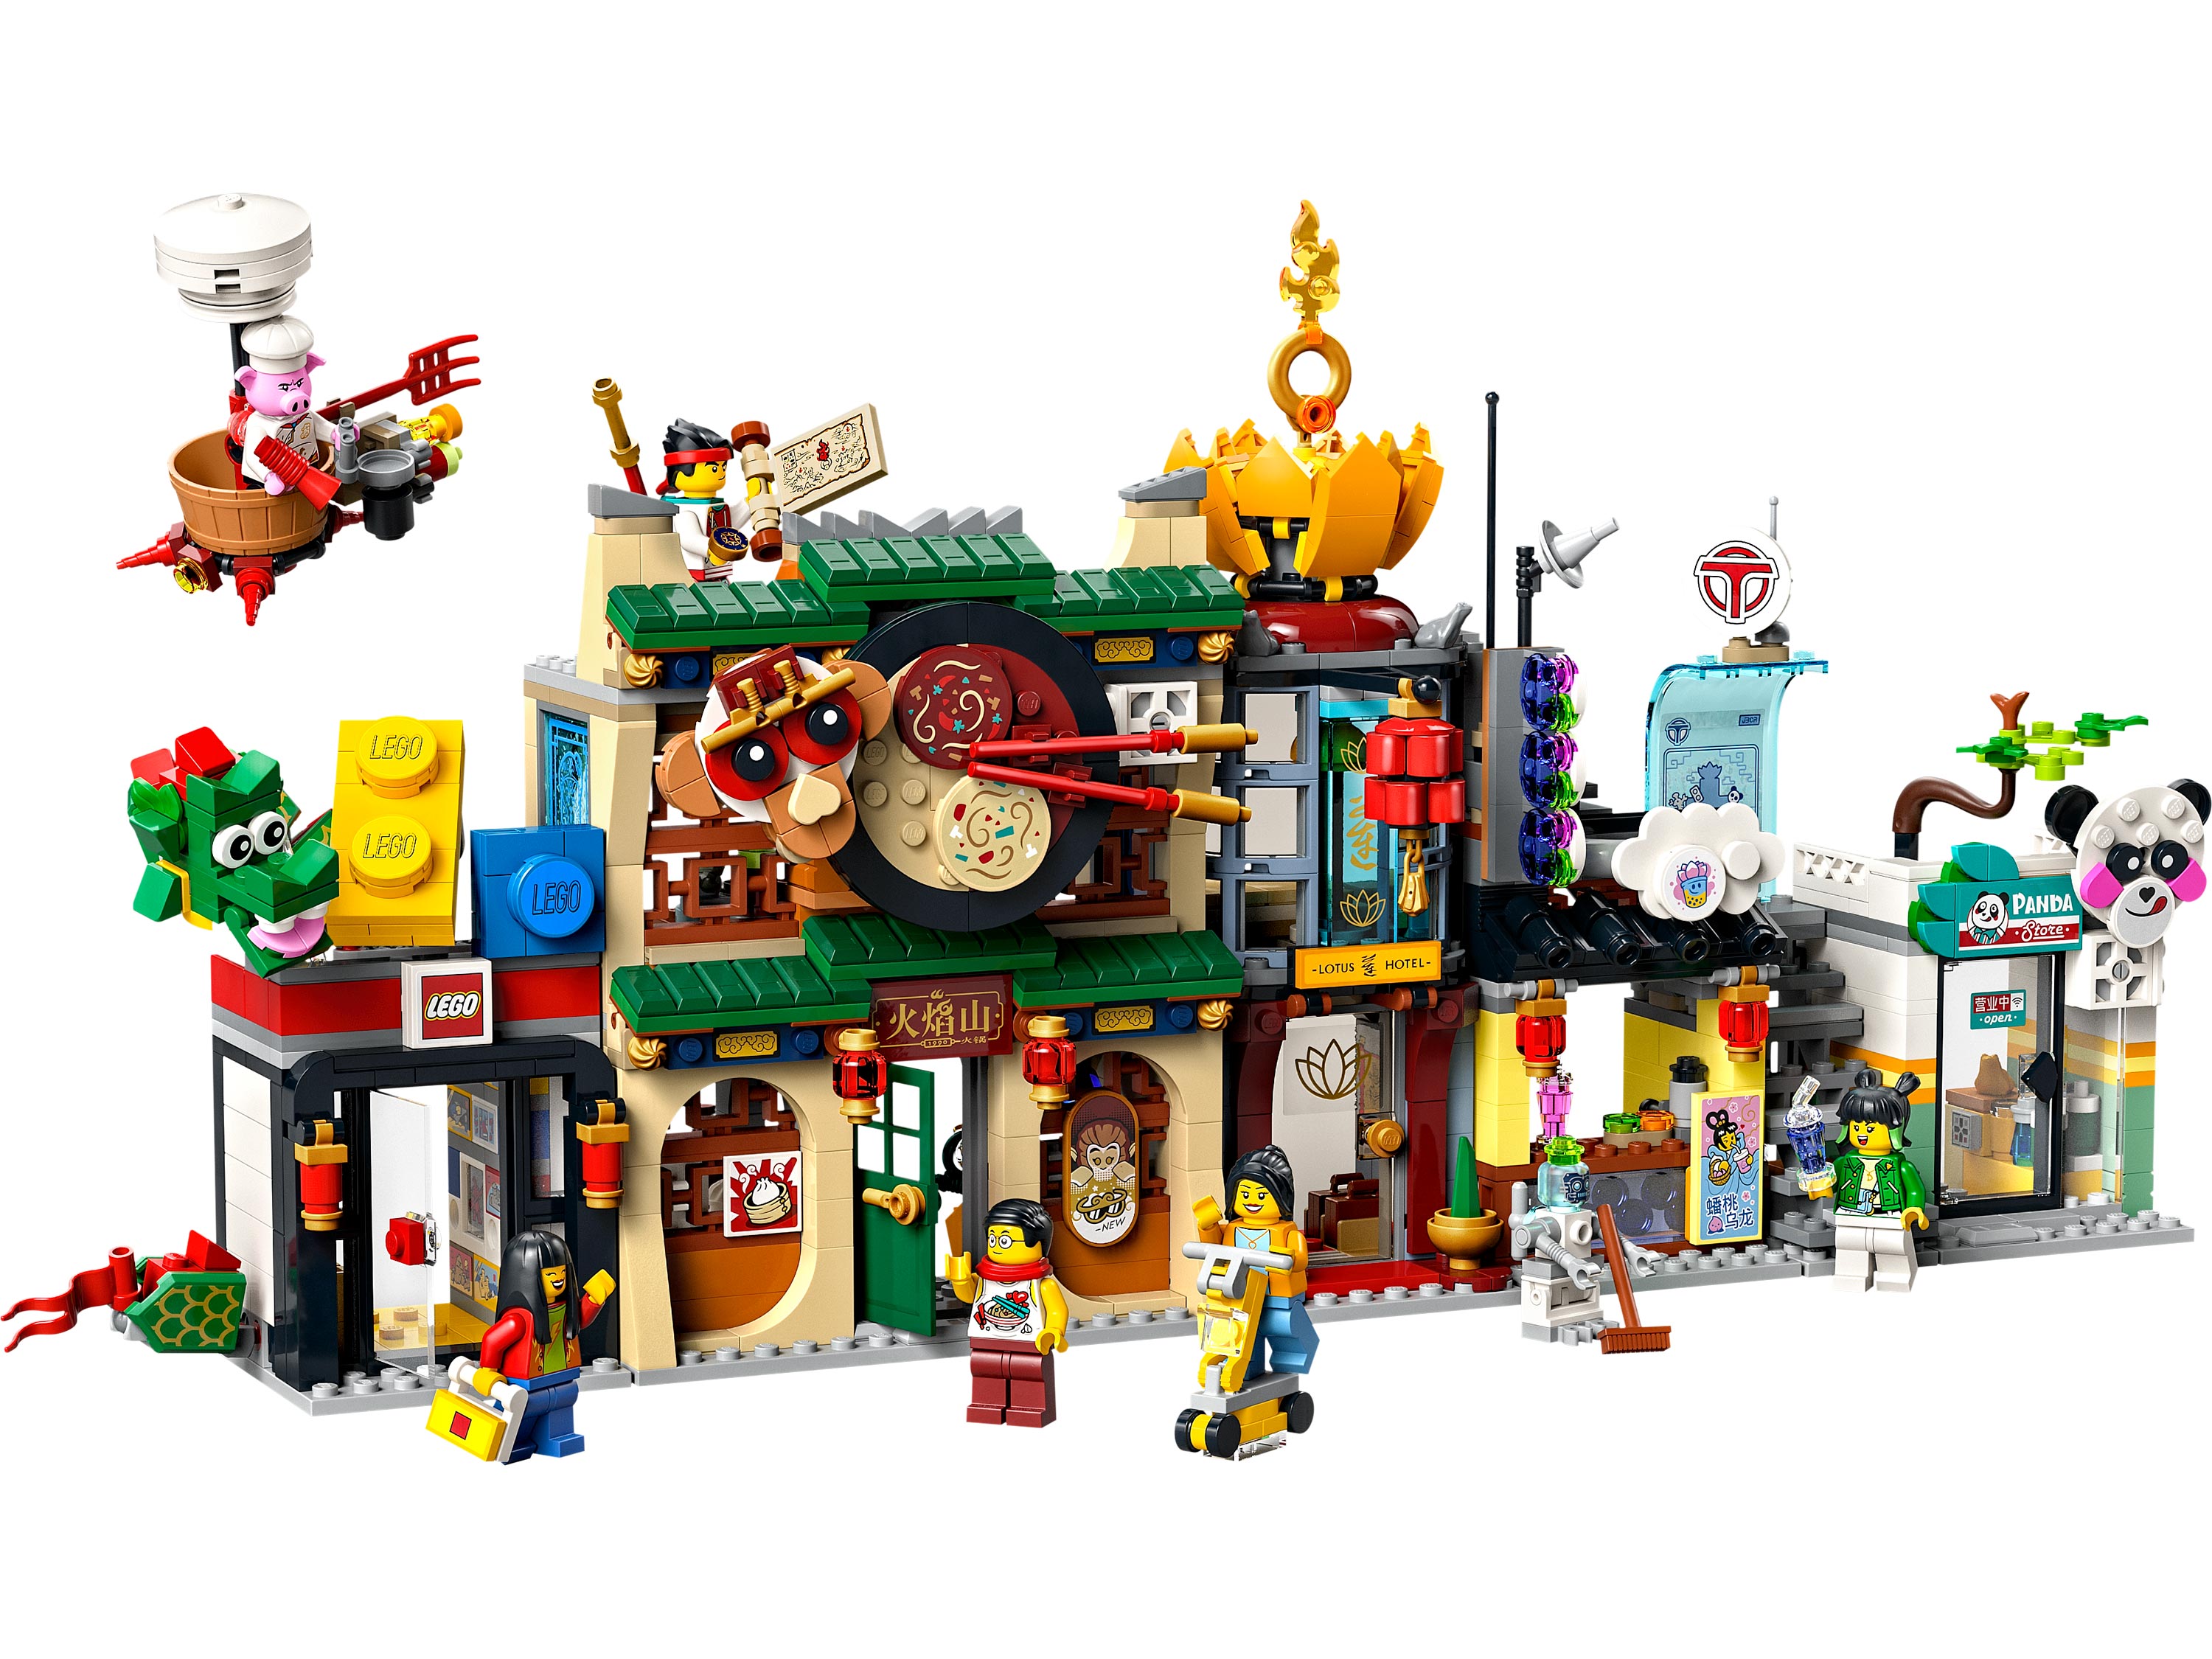 Конструктор LEGO Monkie Kid 80036 Город Фонарей